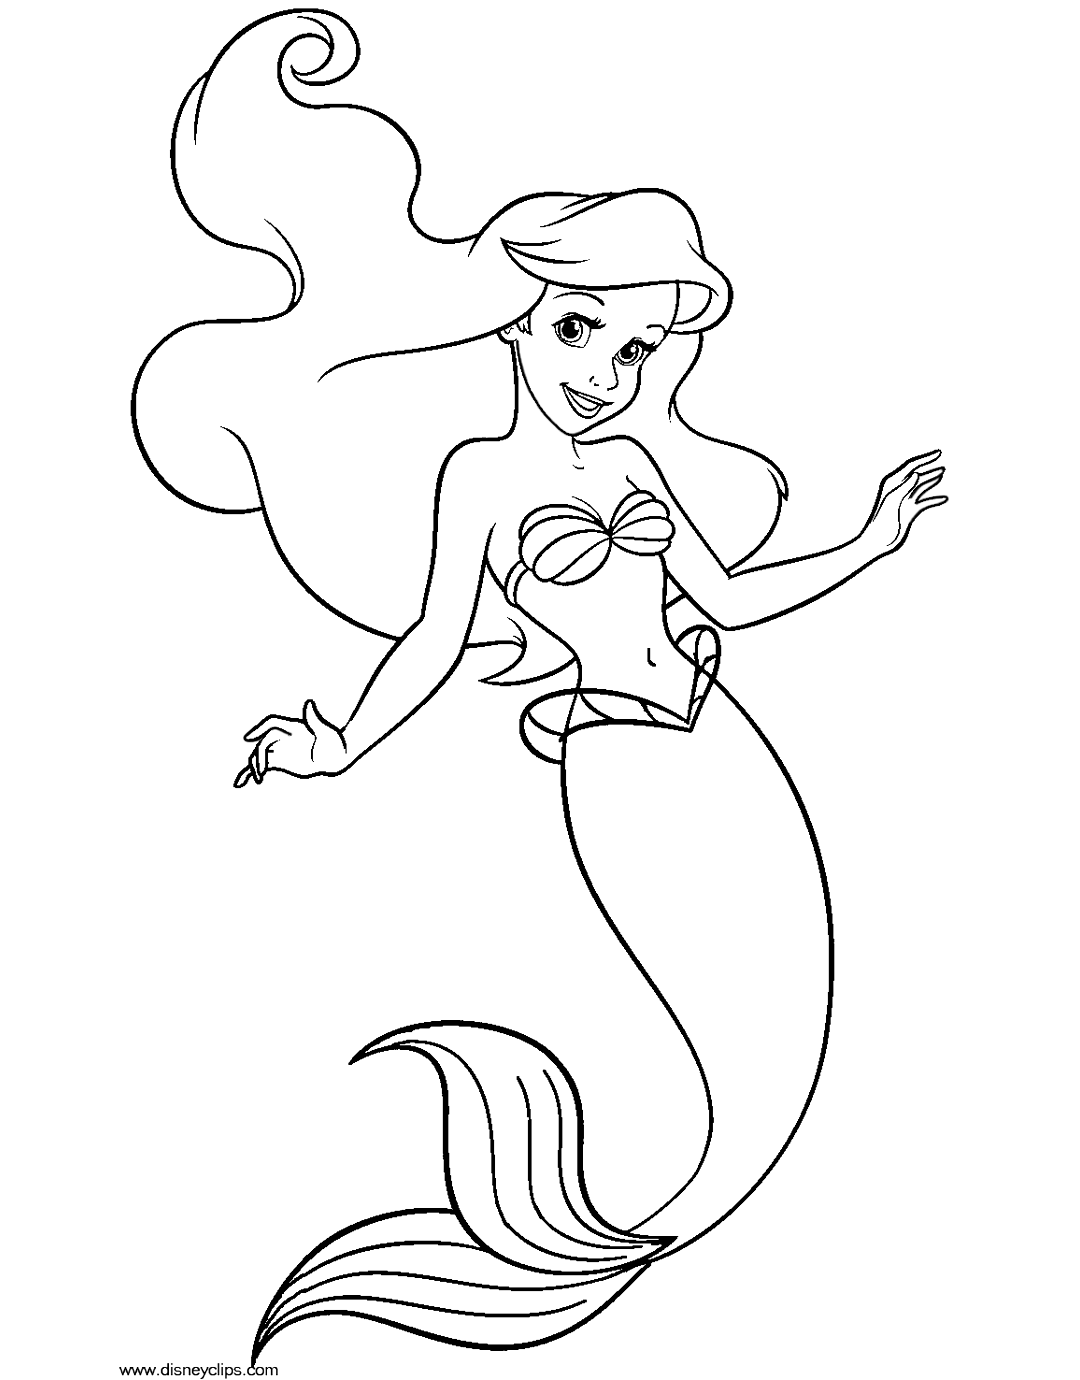 21+ Disney princess mermaid coloring pages ideas in 2021 